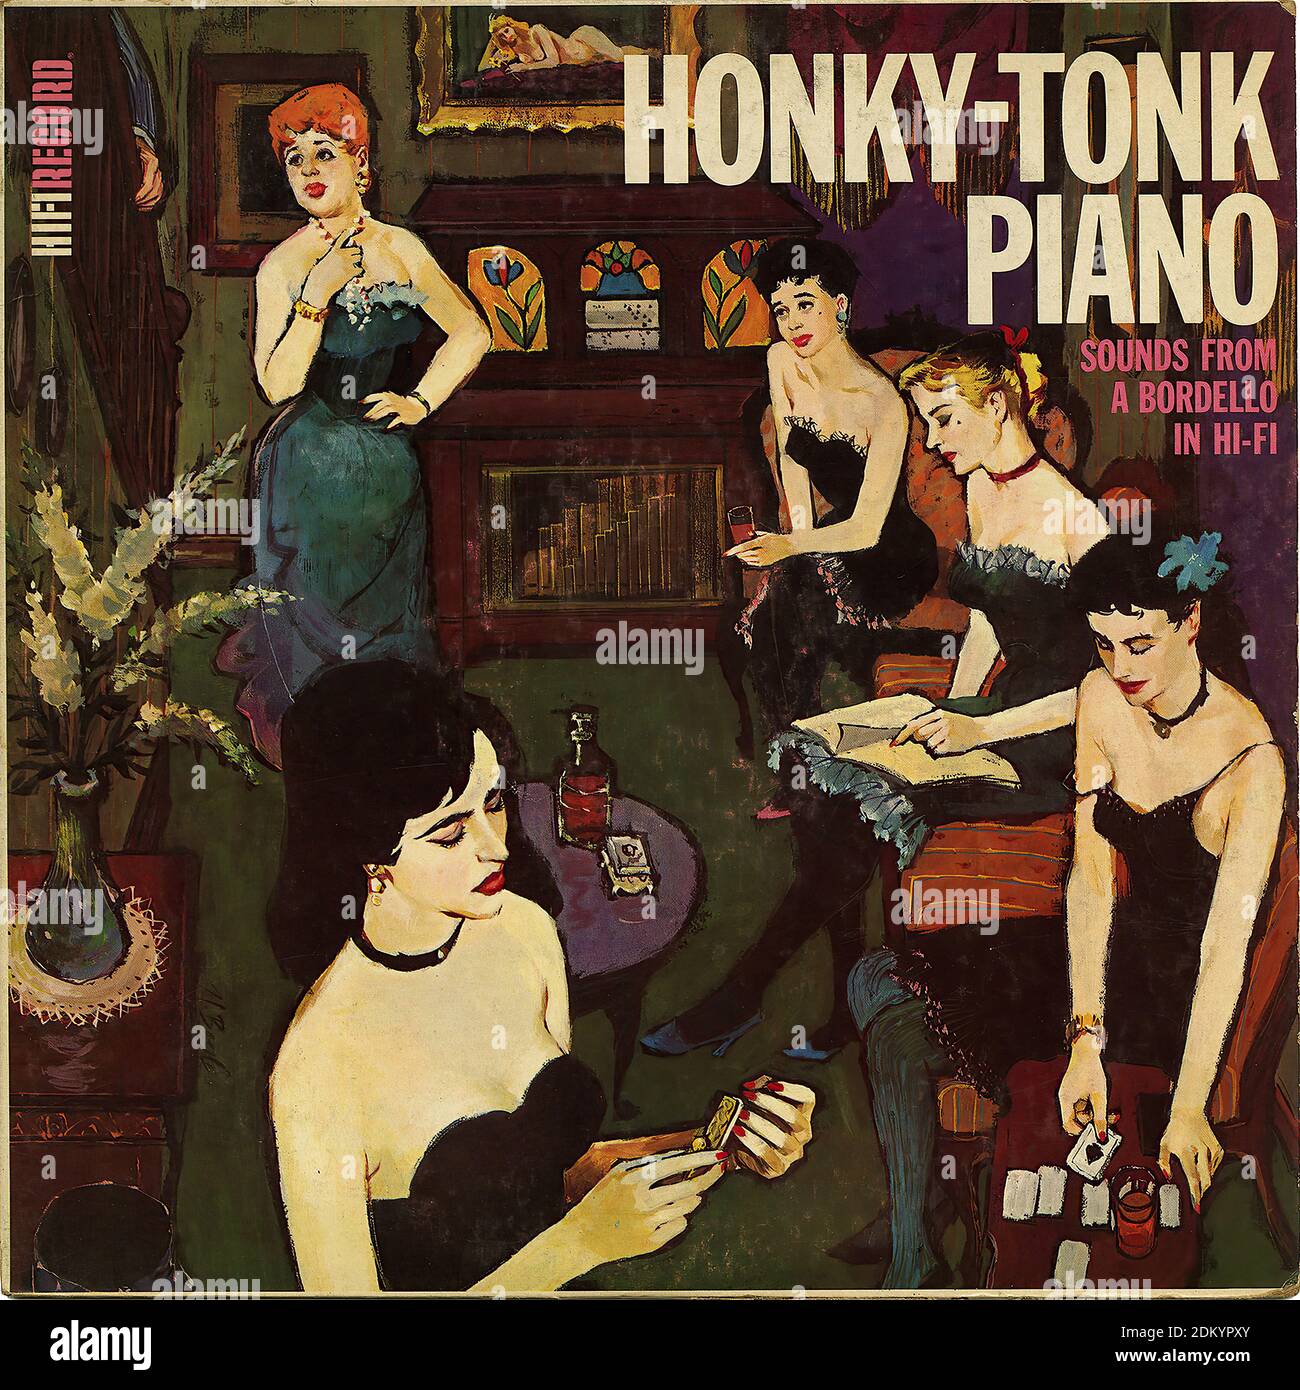 Honky Tonk Piano - Vintage Vinyl Record Cover Stock Photo - Alamy